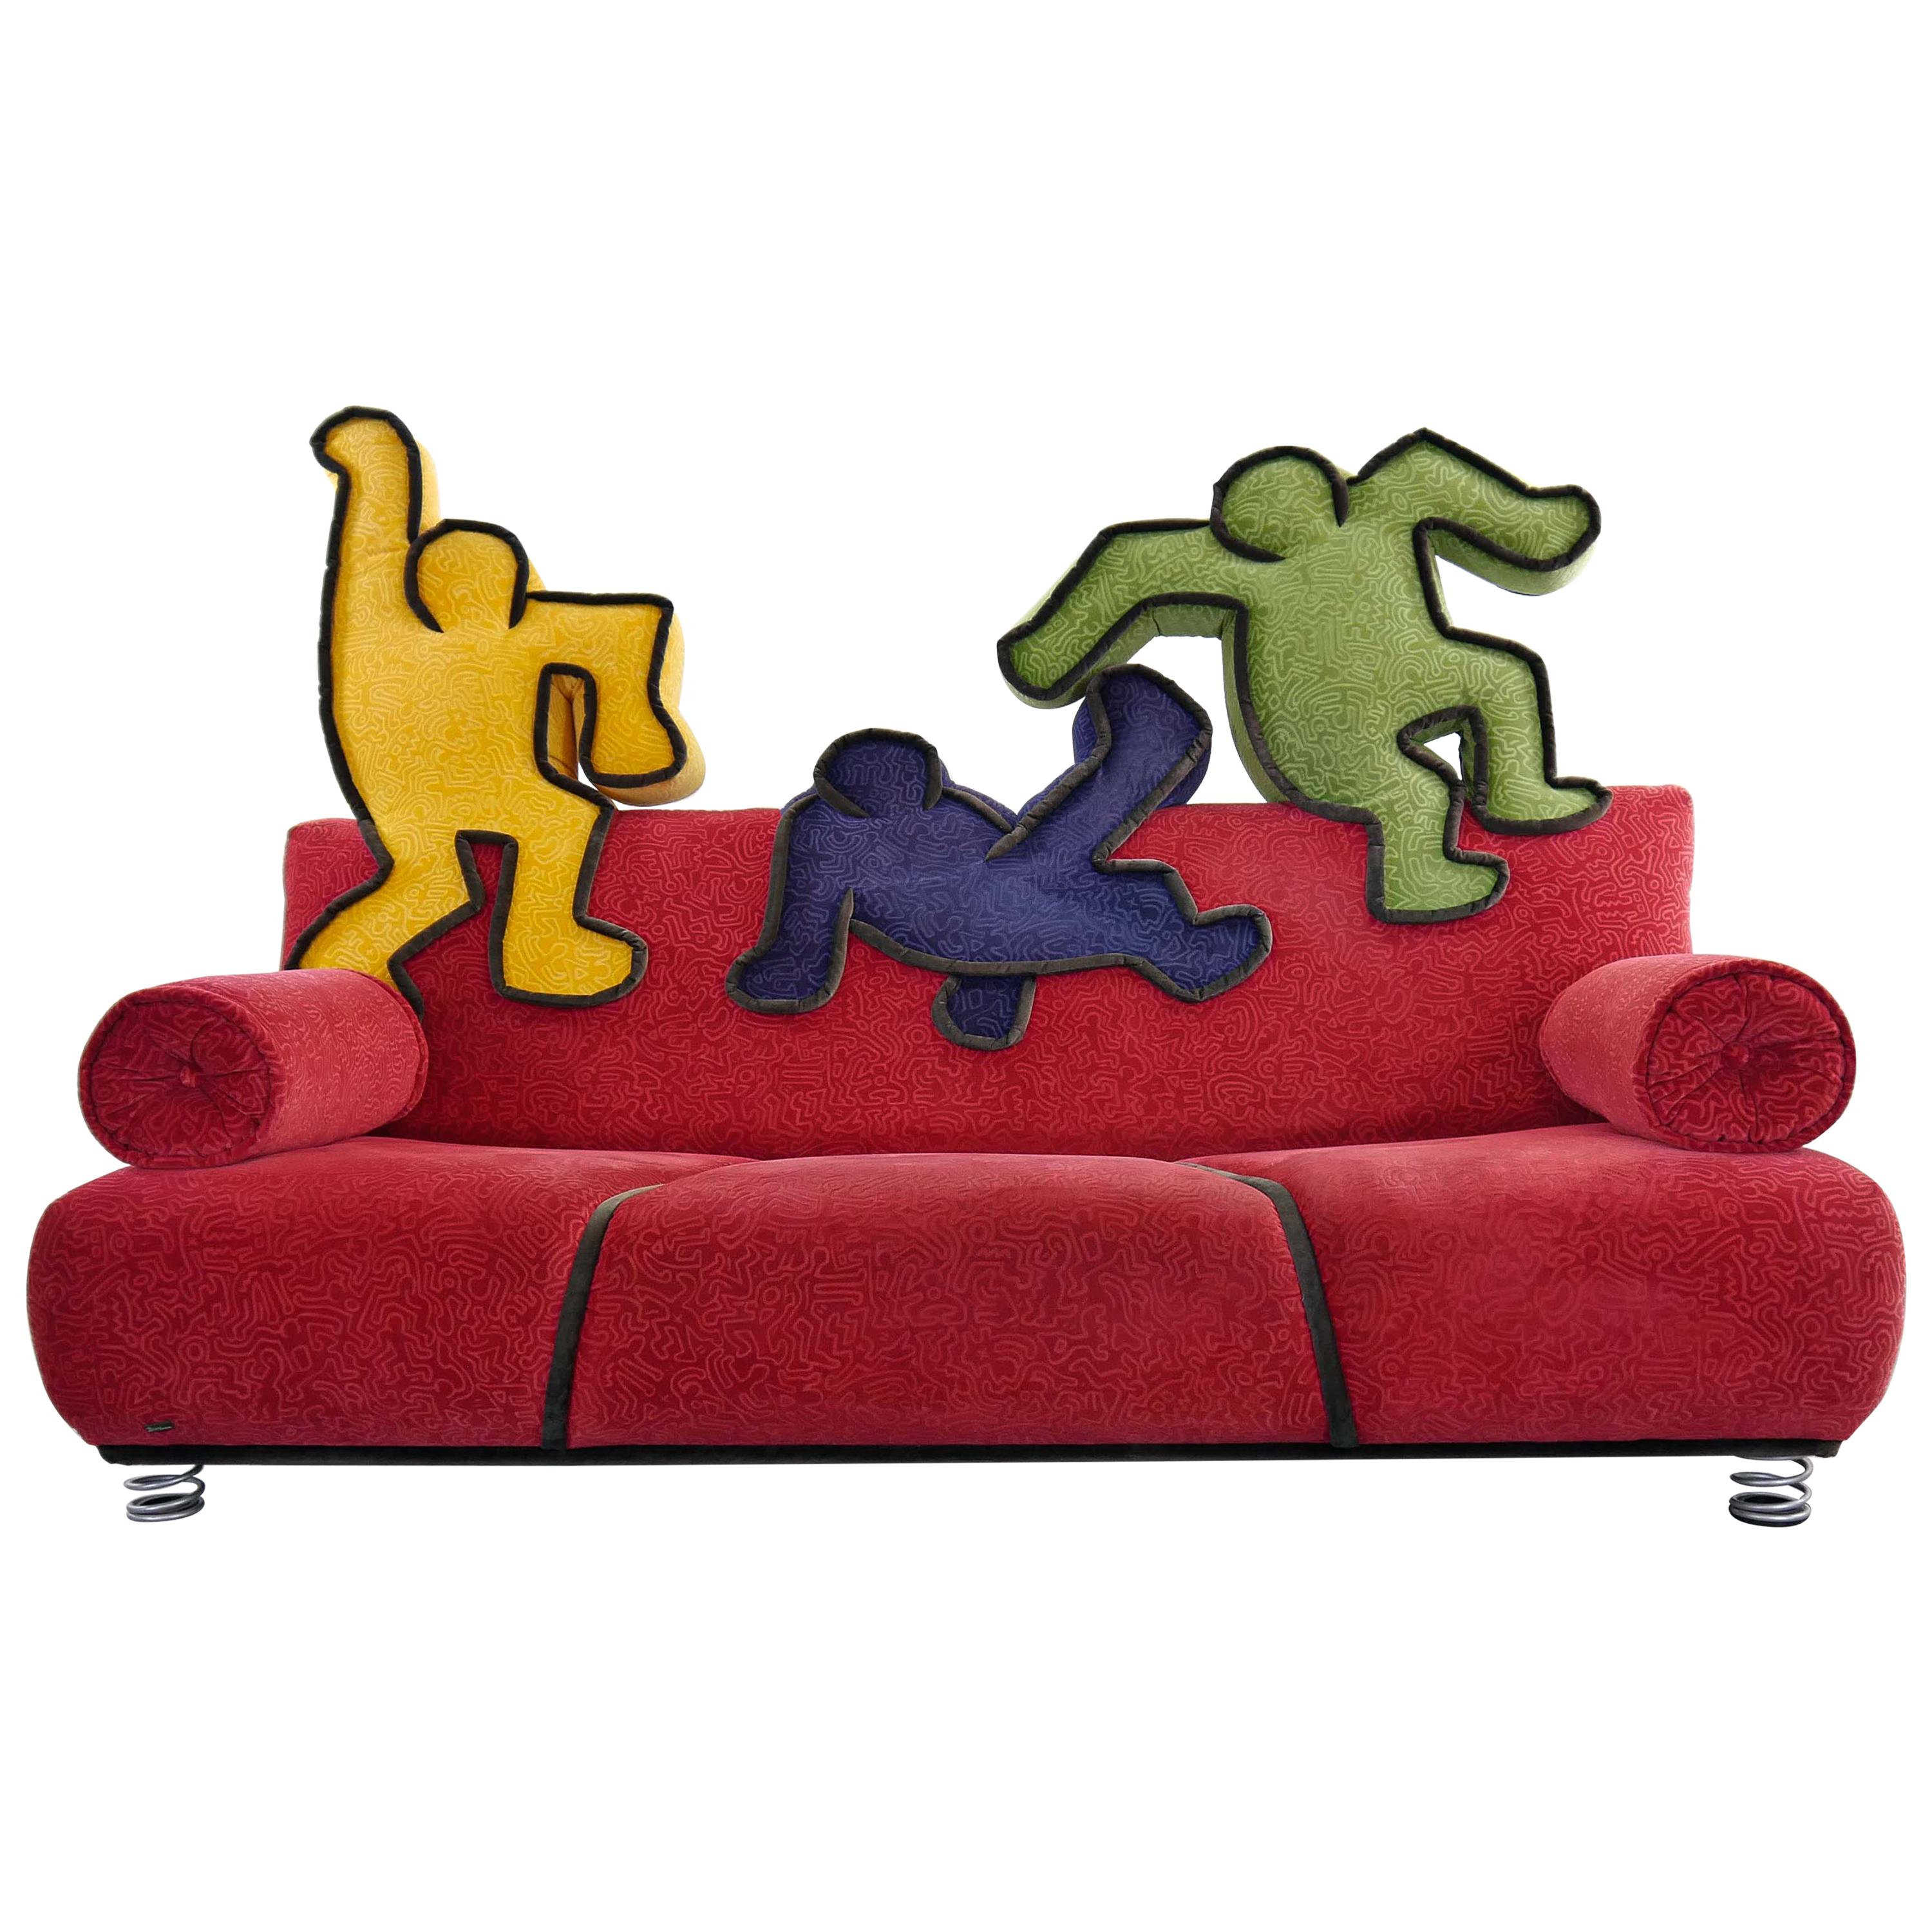 Keith Haring Sofa by Bretz 2002 Pop Art